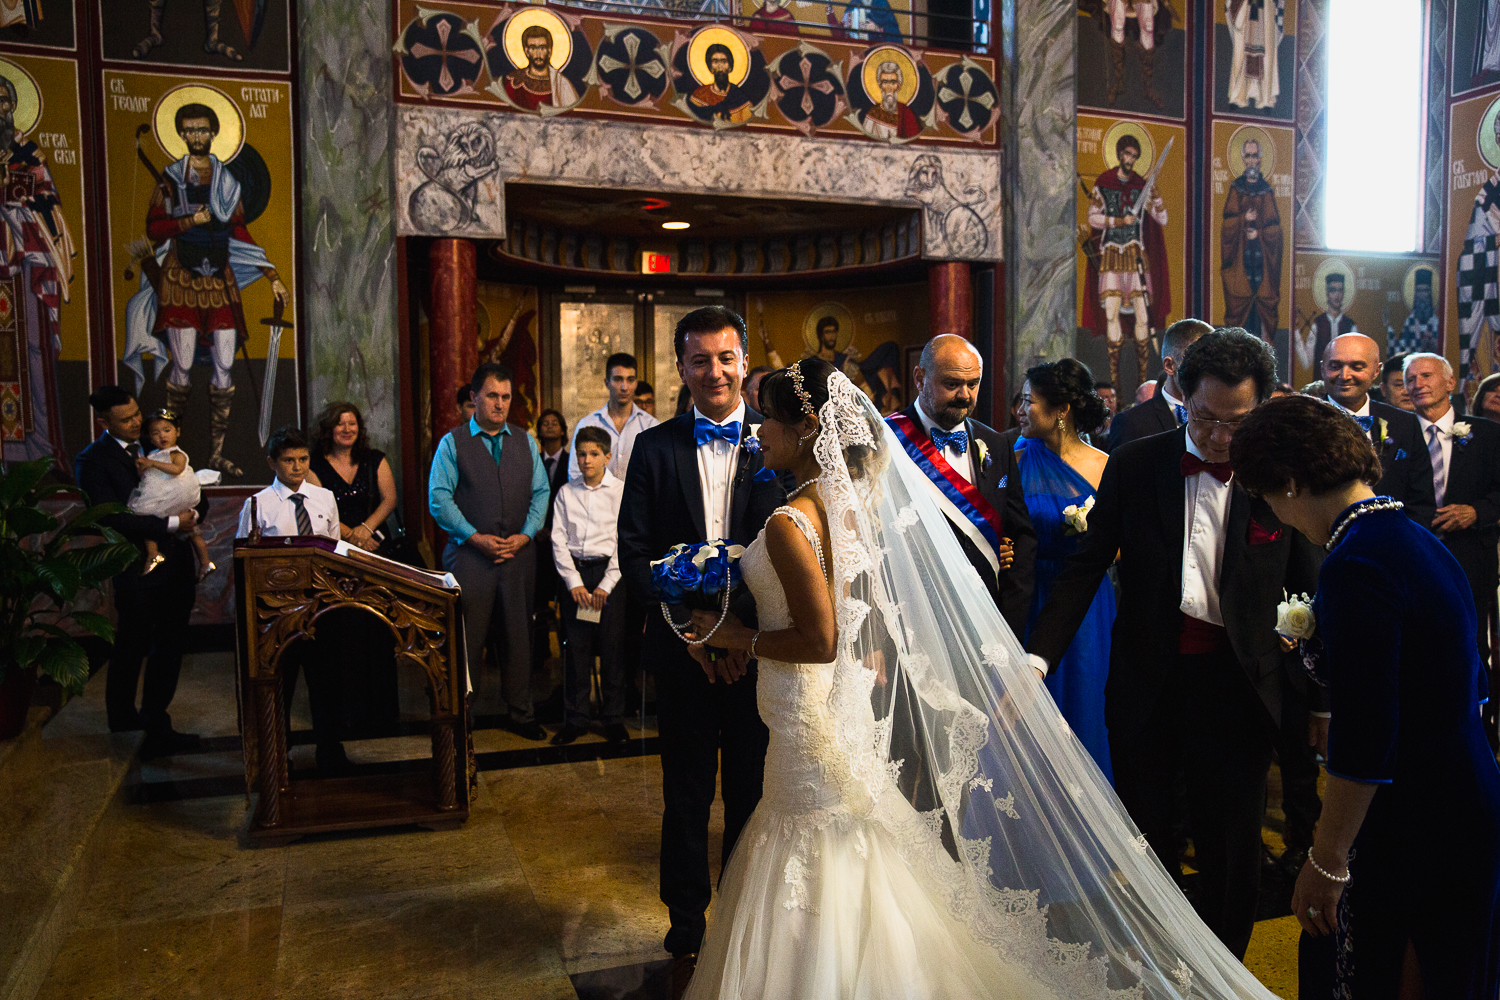 St-Sava-Serbian-Orthodox-Church-Wedding-Mississauga-Ontario-Derrel-Ho-Shing-Photography-0003.jpg